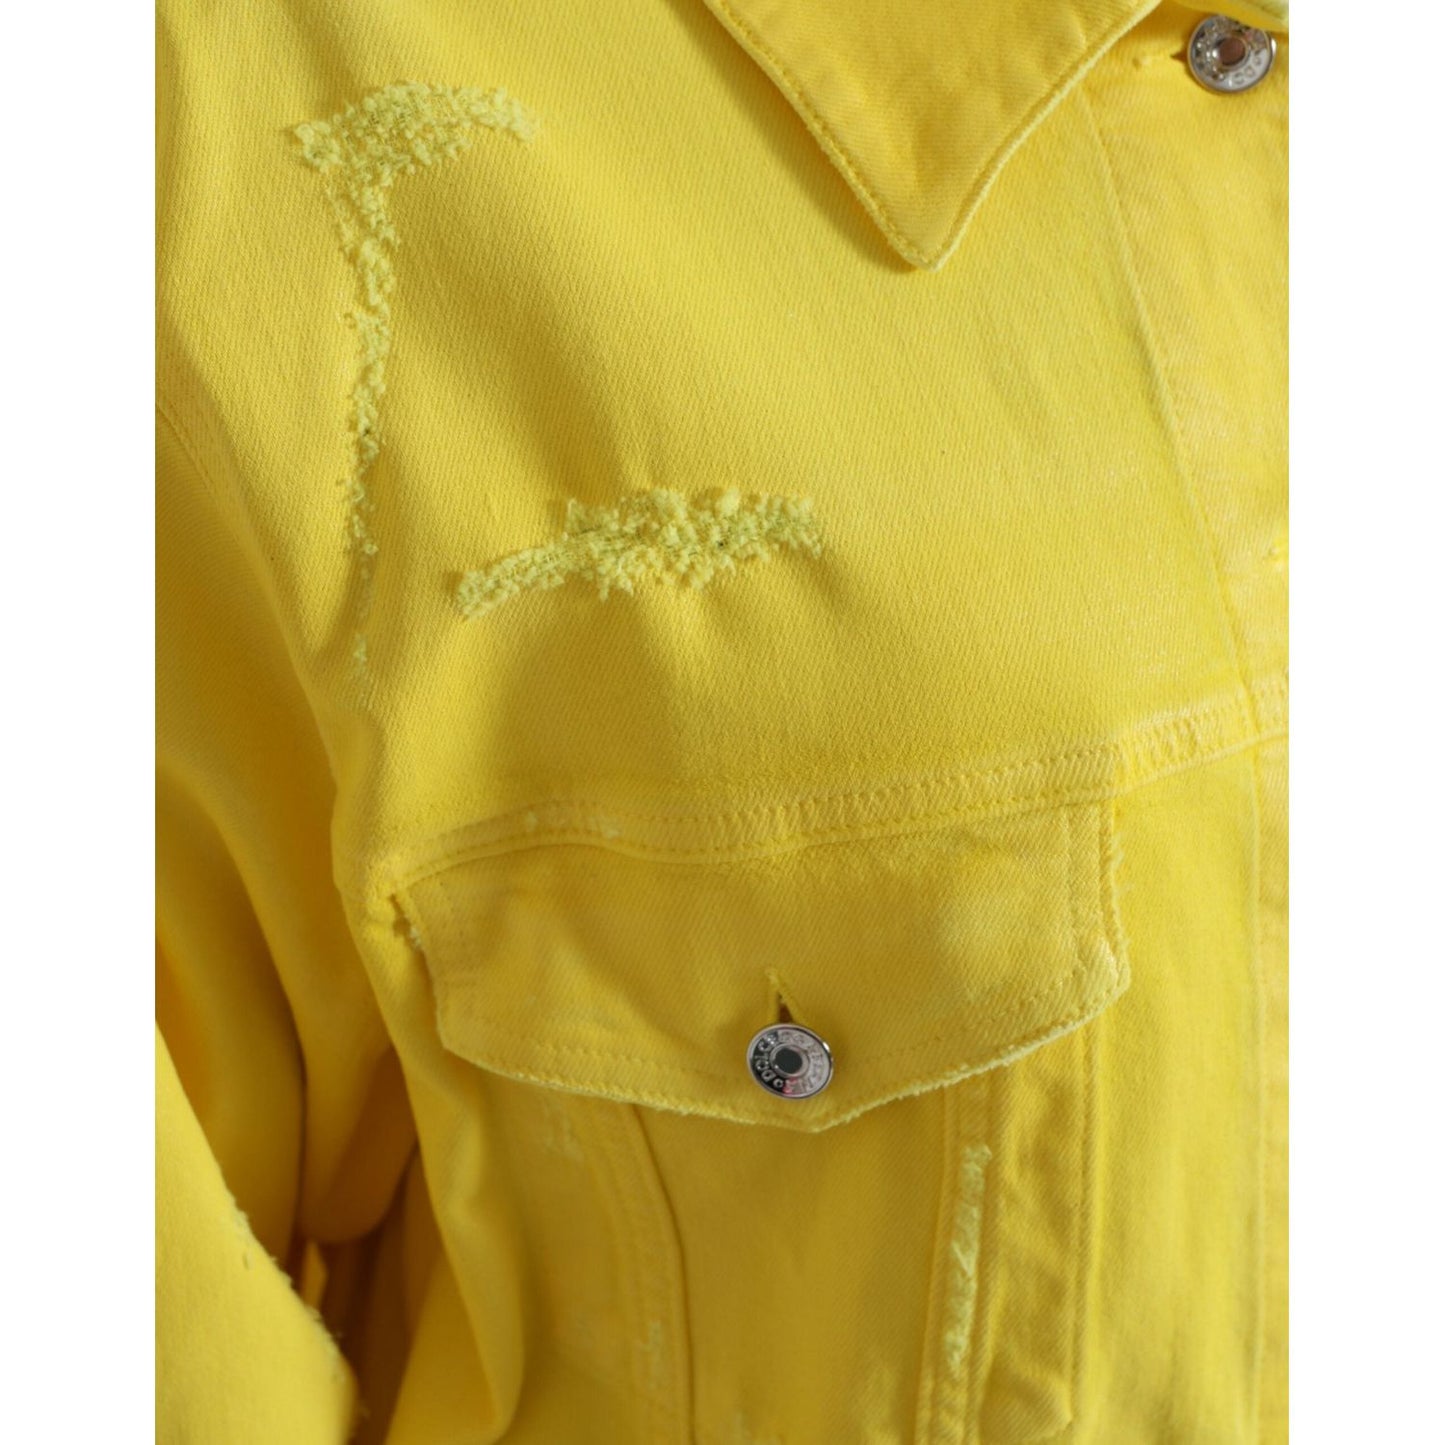 Dolce & Gabbana Exquisite Yellow Denim Button-Down Jacket yellow-cotton-denim-jeans-coat-jacket